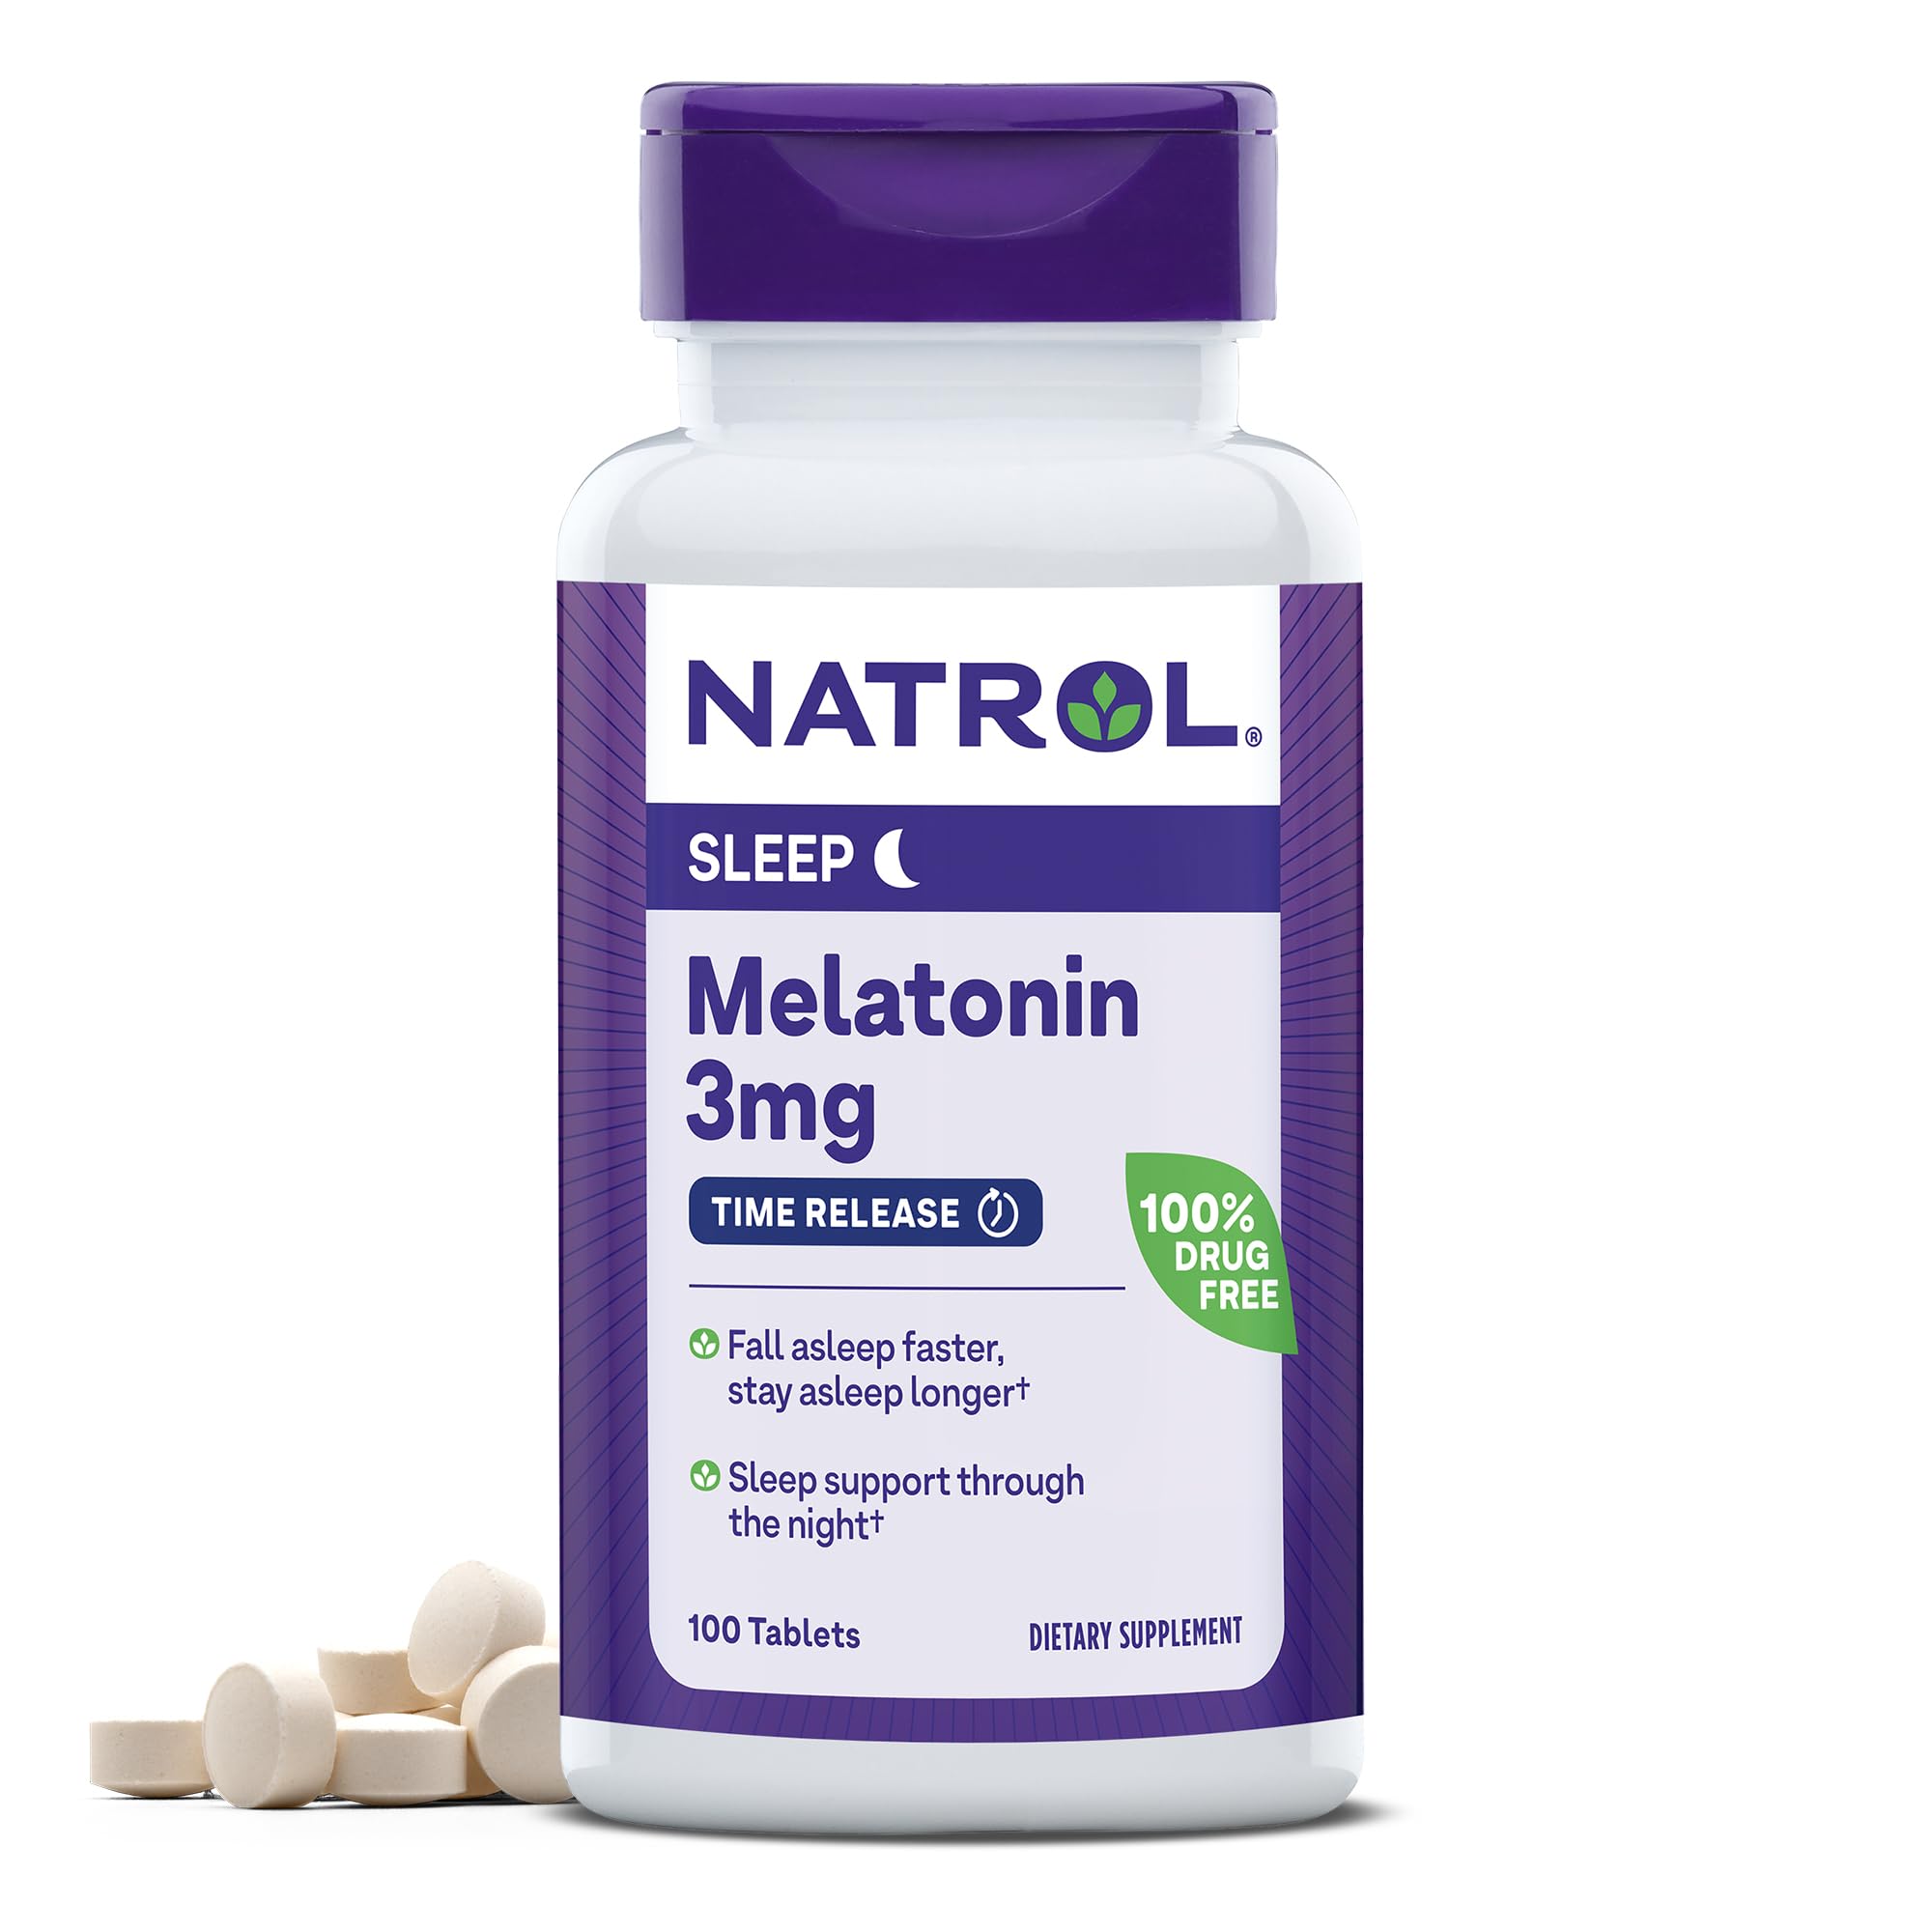 Natrol Melatonin Time Release Tablets, Helps You Fall Asleep Faster, Stay Asleep Longer, 100% Vegetarian, 3mg, 100 Count画像